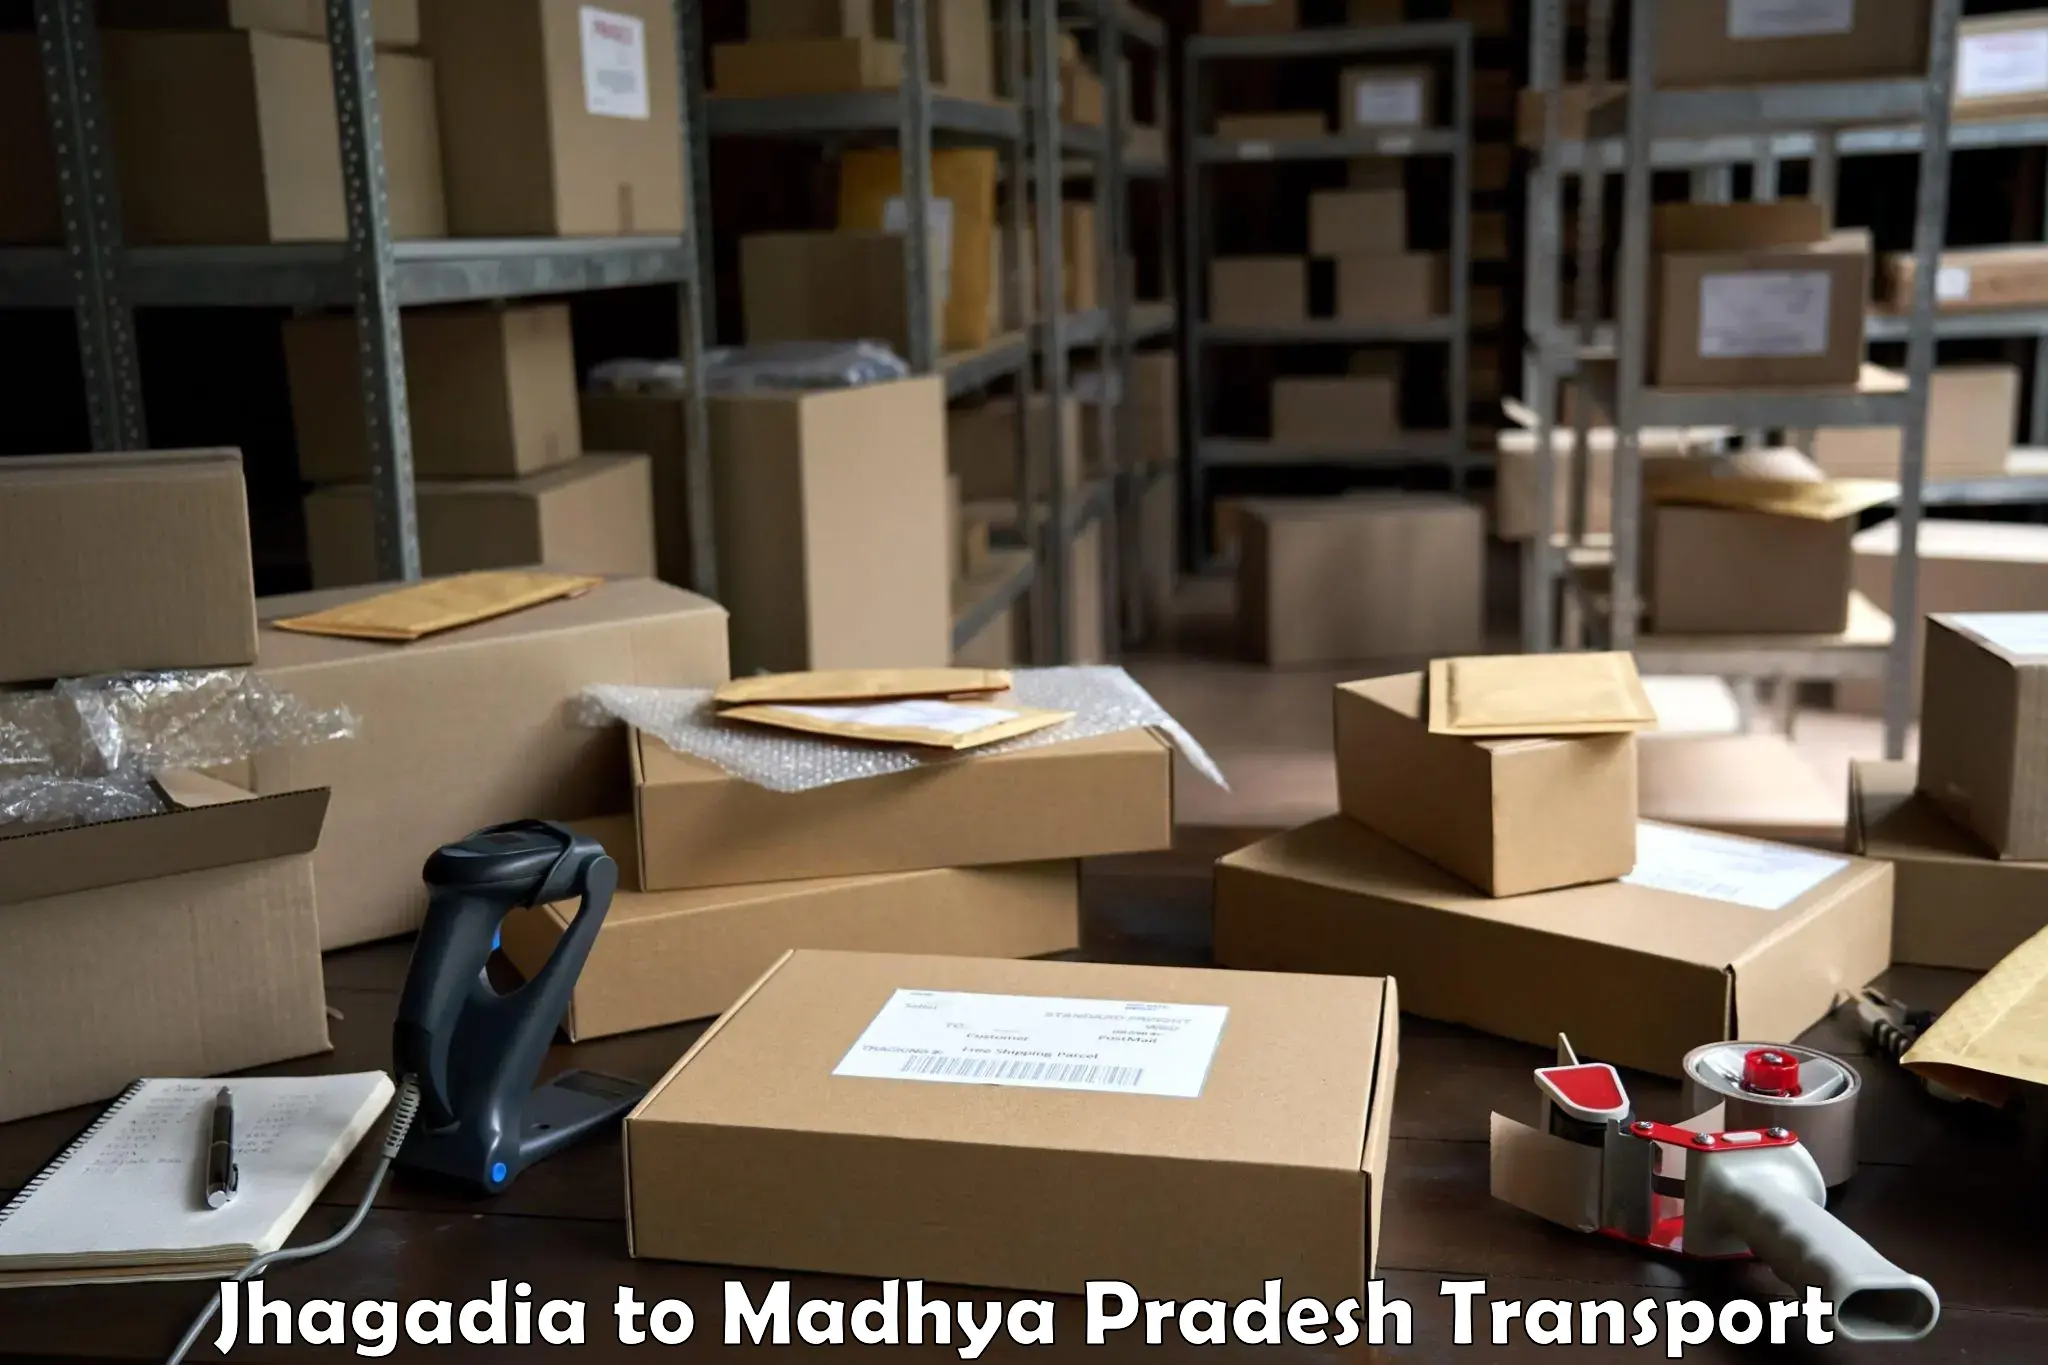 Transport shared services in Jhagadia to Harda